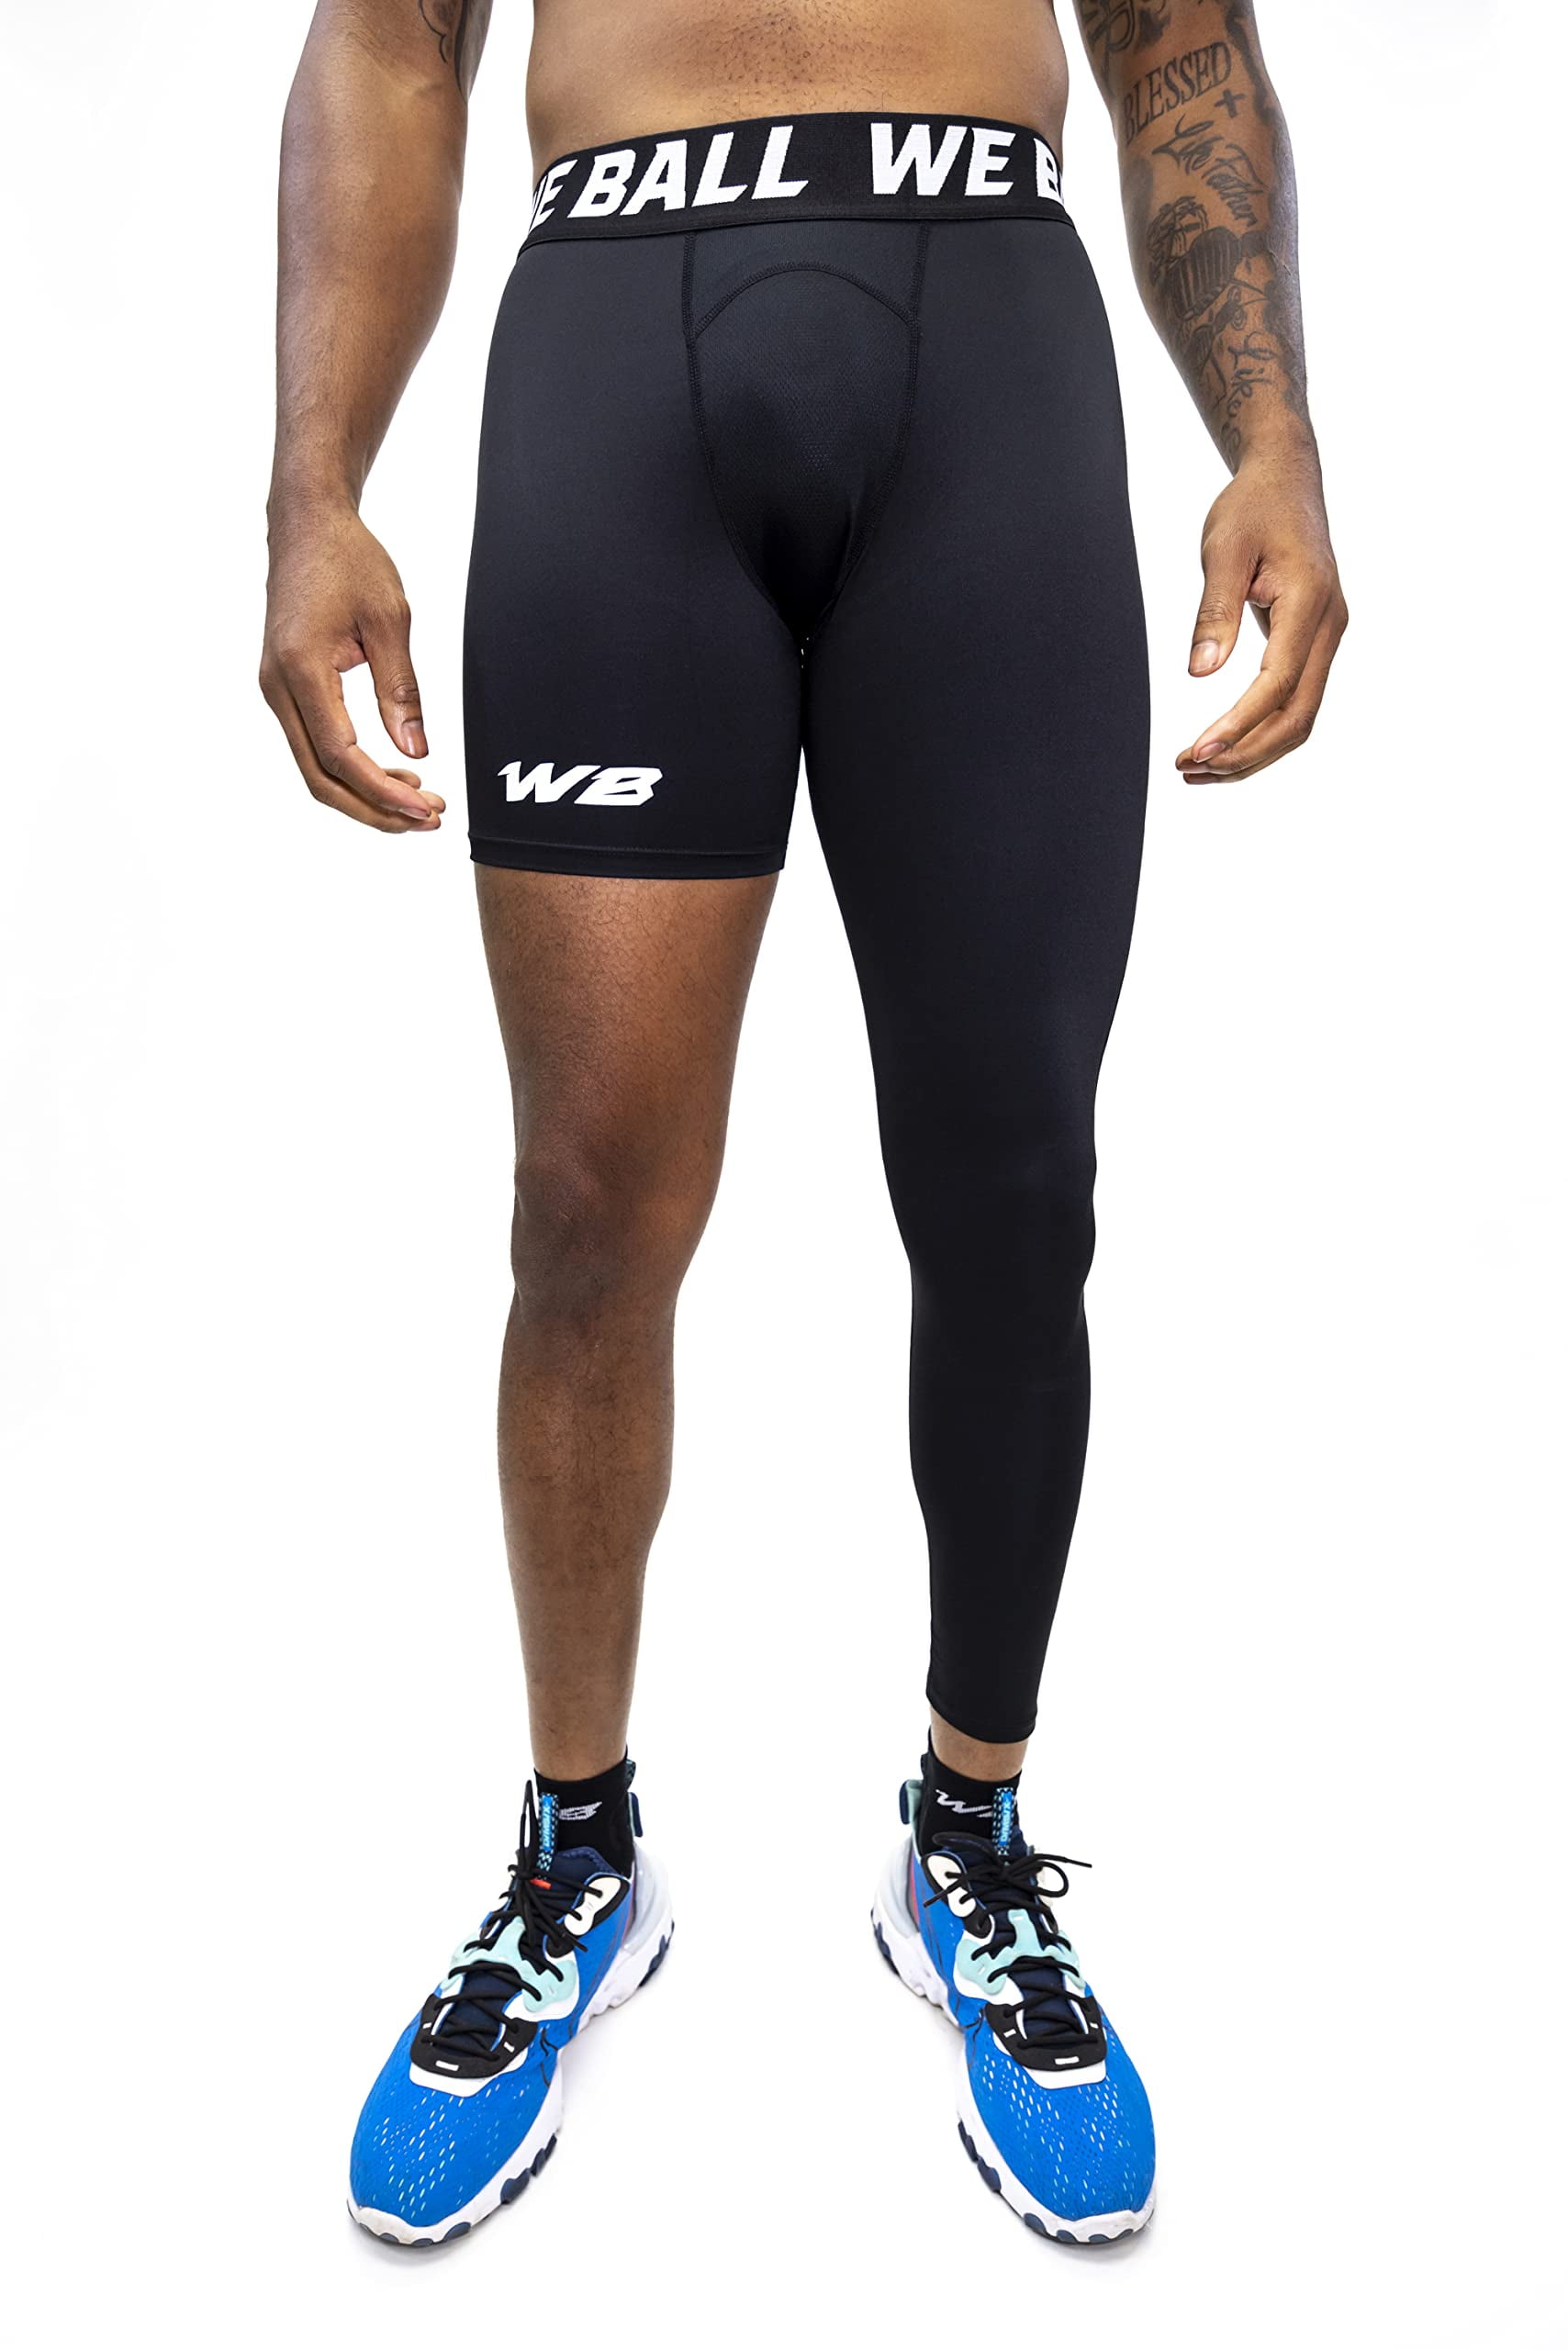 Long men's sports leggings 2-in-1 SAXX KINETIC Tight - black. Black |  BRANDS \ SAXX \ SPORTS BOXER SHORTS | Red Bird Dystrybutor Markowe Gadżety  i odzież reklamowa